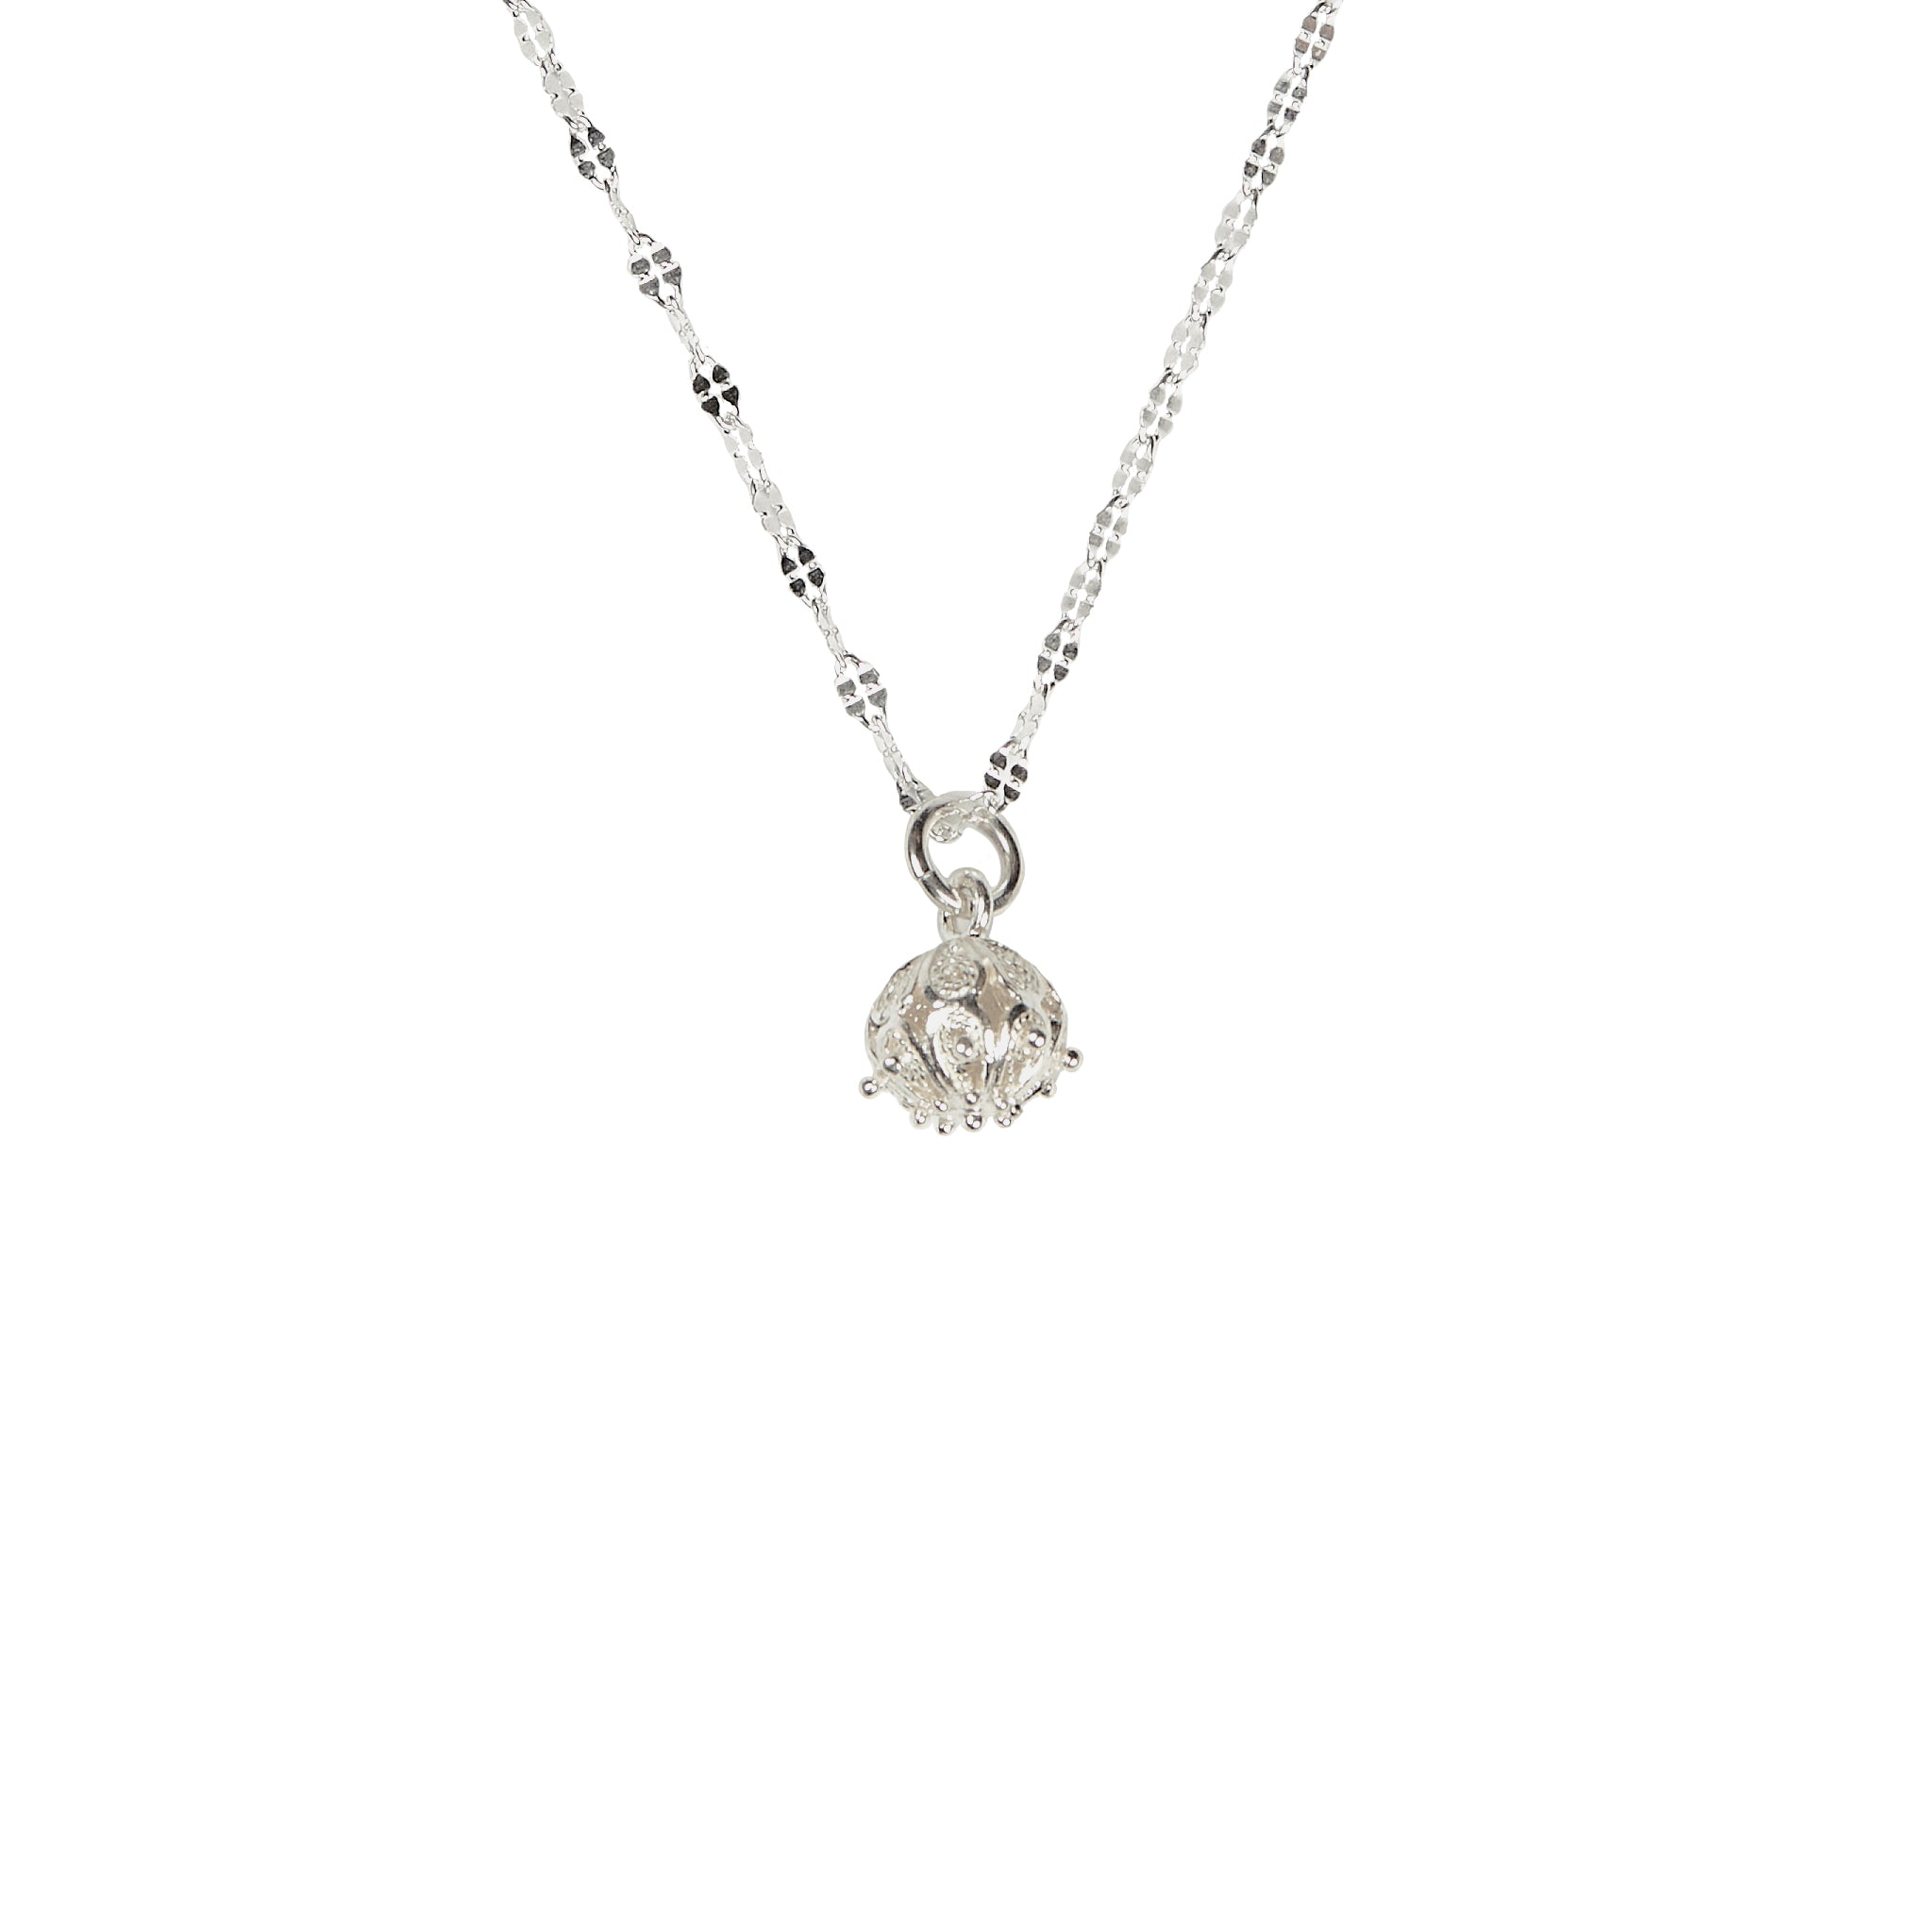 ANNIE Chain - Filigree - Bleached silver 925/1000 | MEA AYAYA